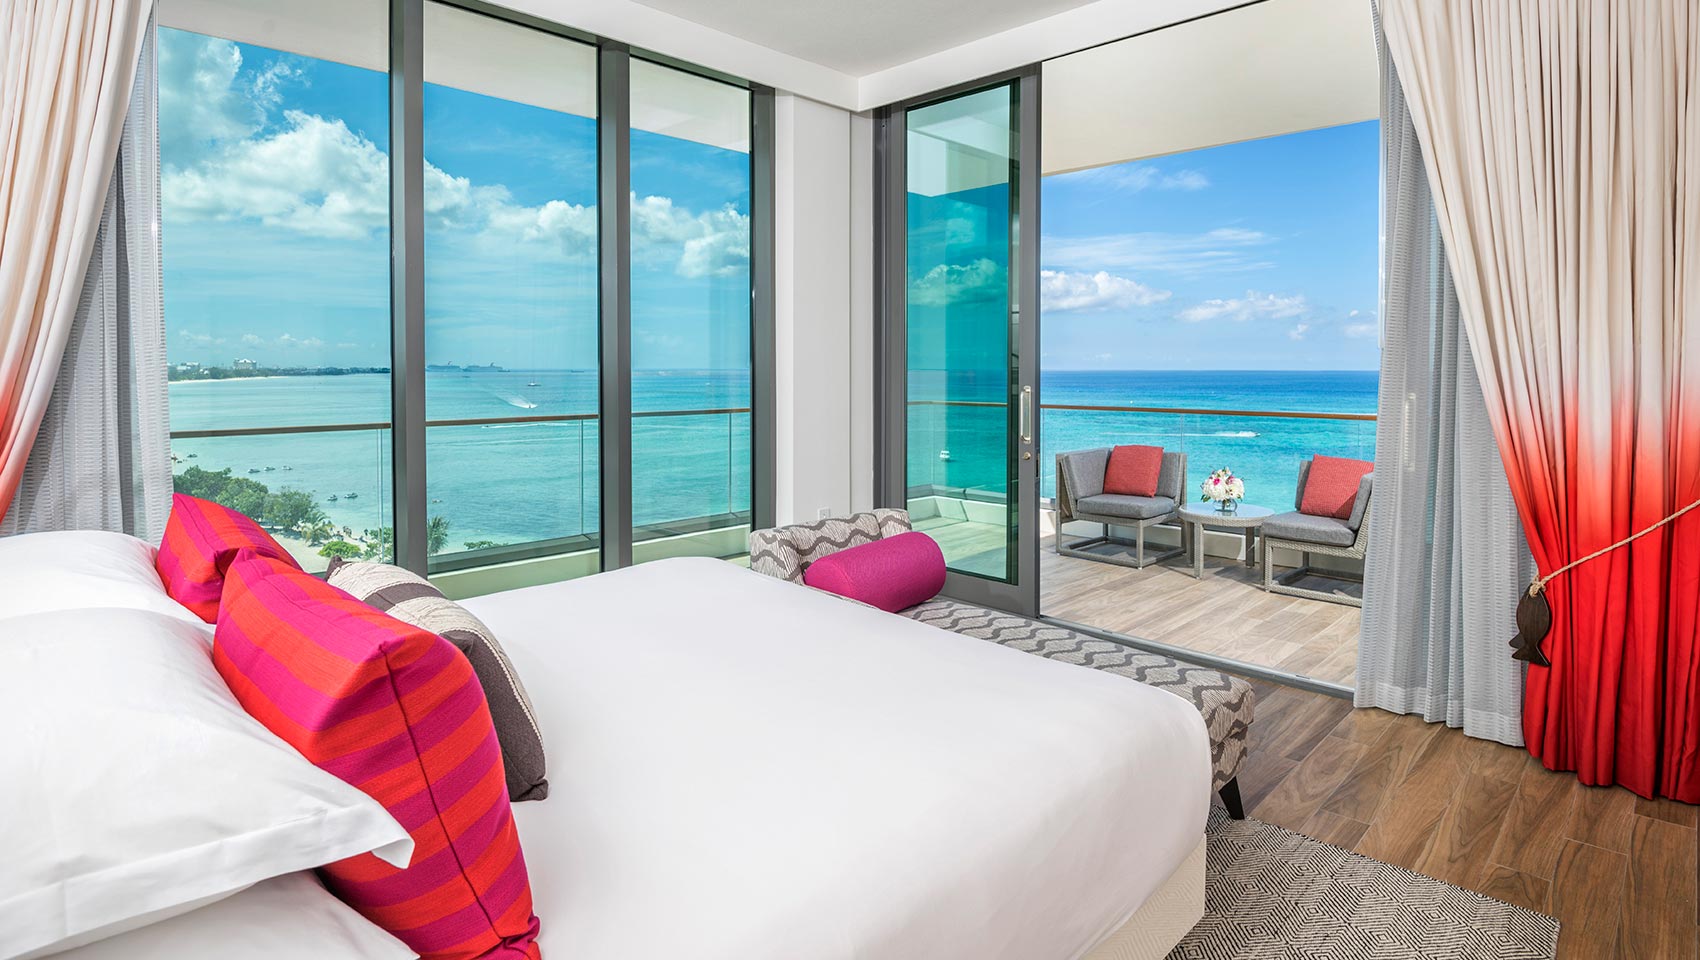 guestroom with ocean view